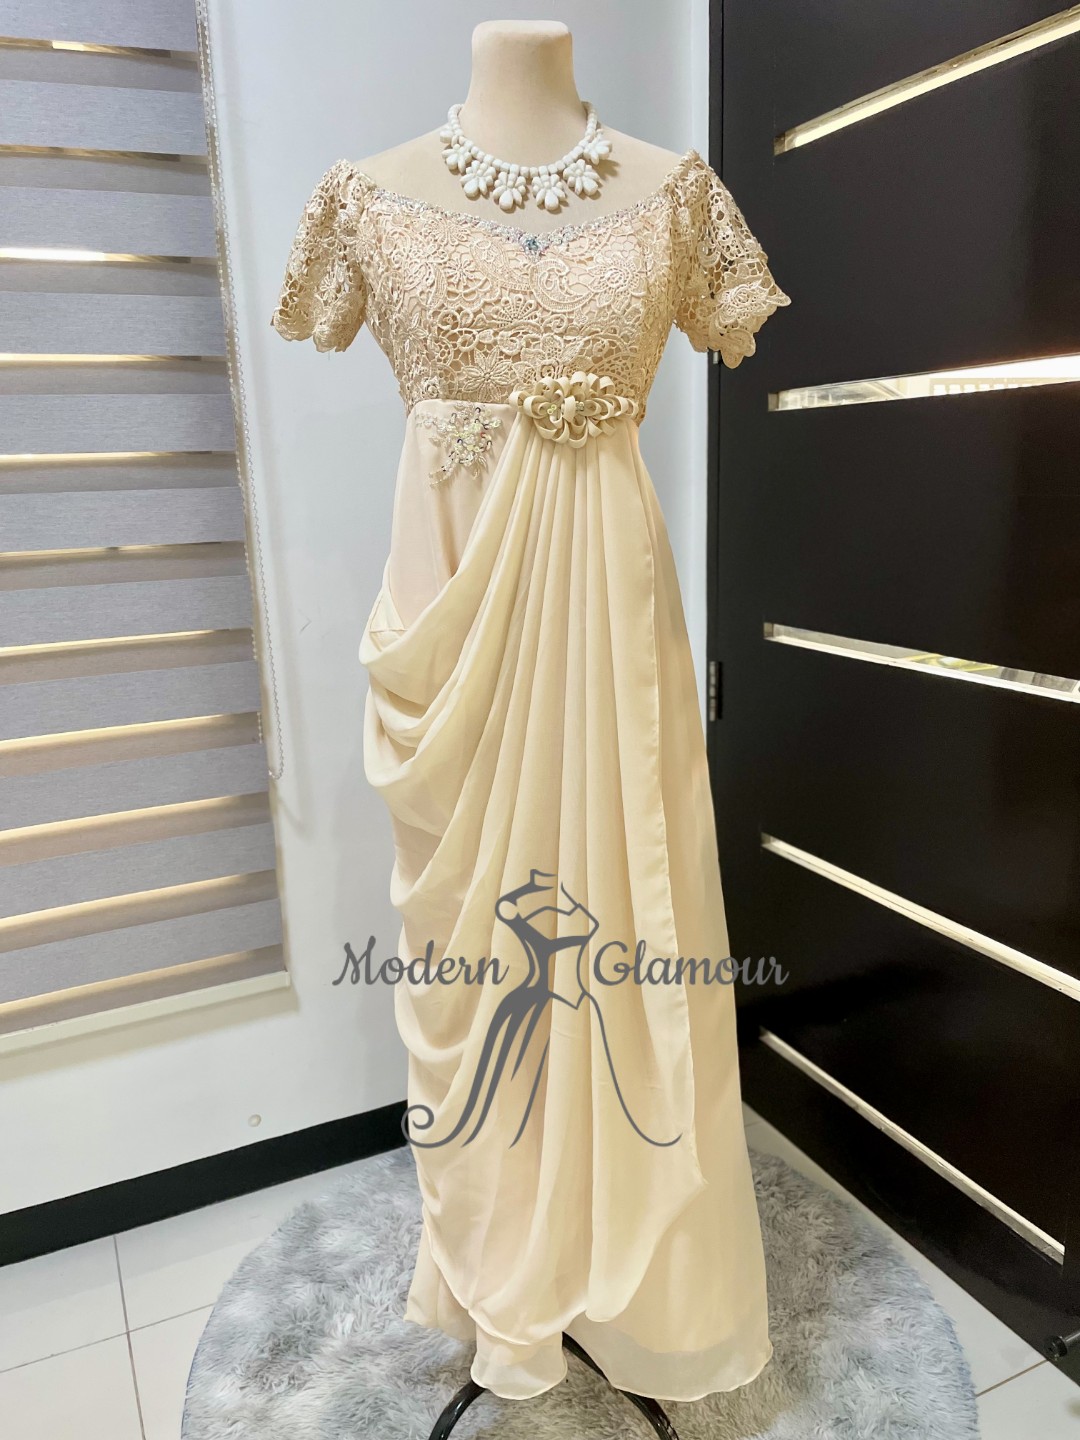 Shop dress wedding ninang for Sale on Shopee Philippines